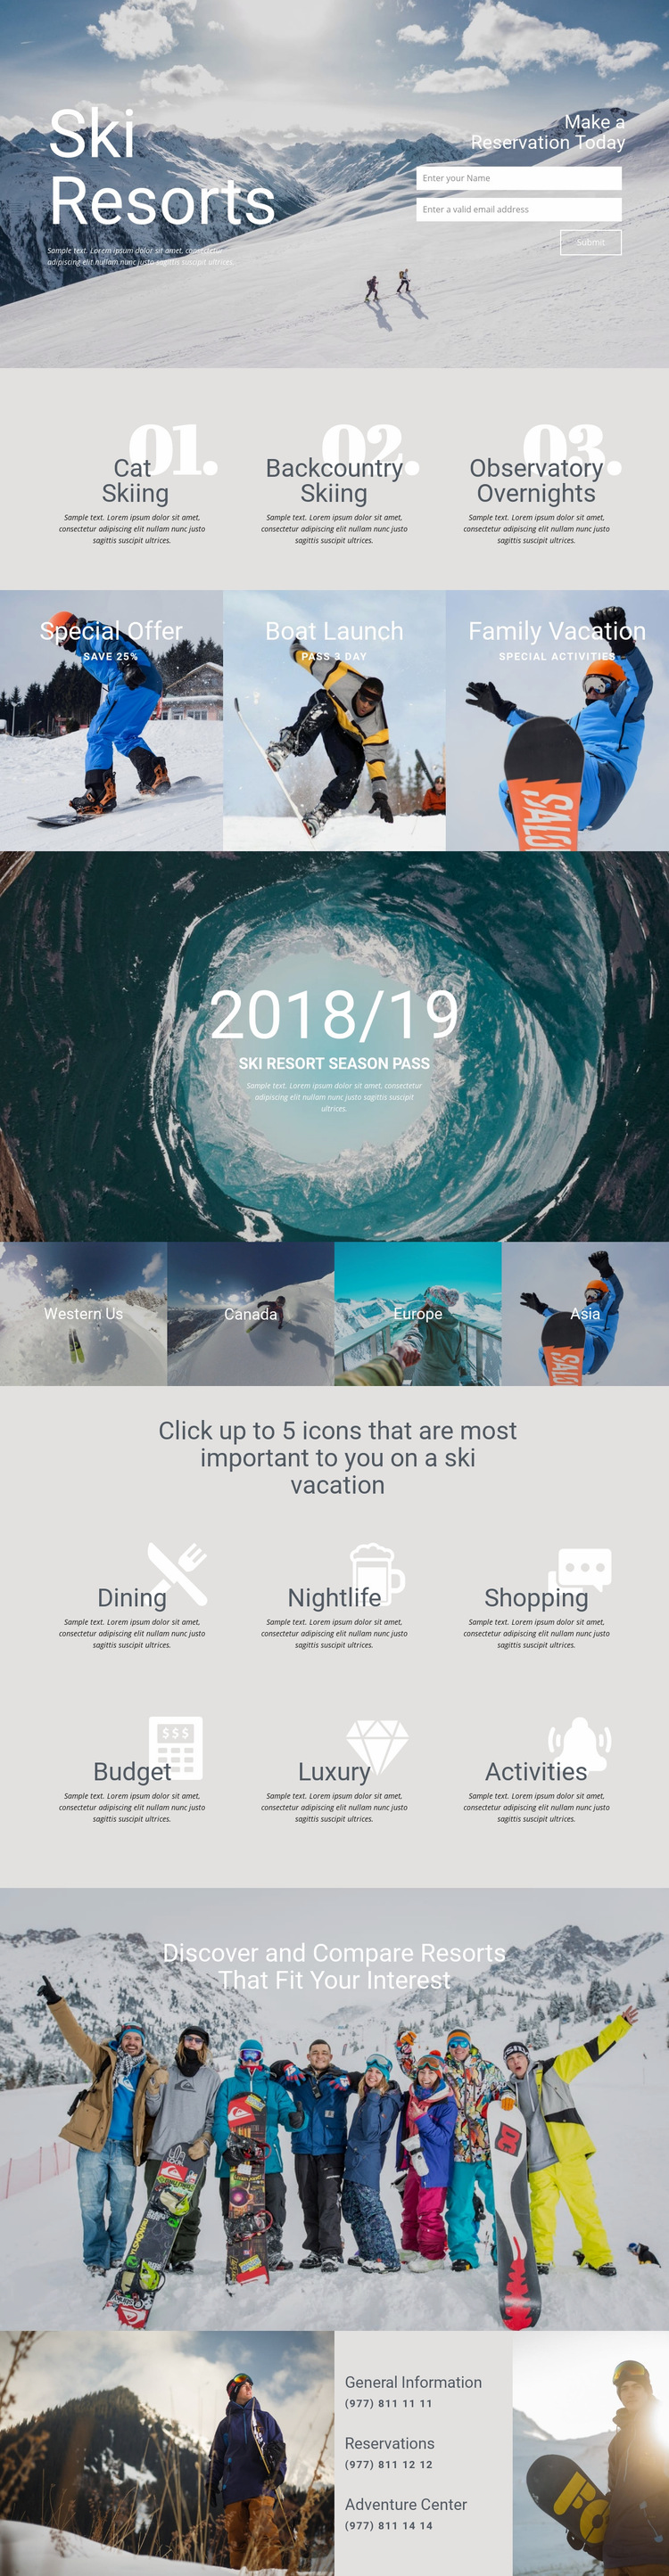 Ski Resorts Web Page Design